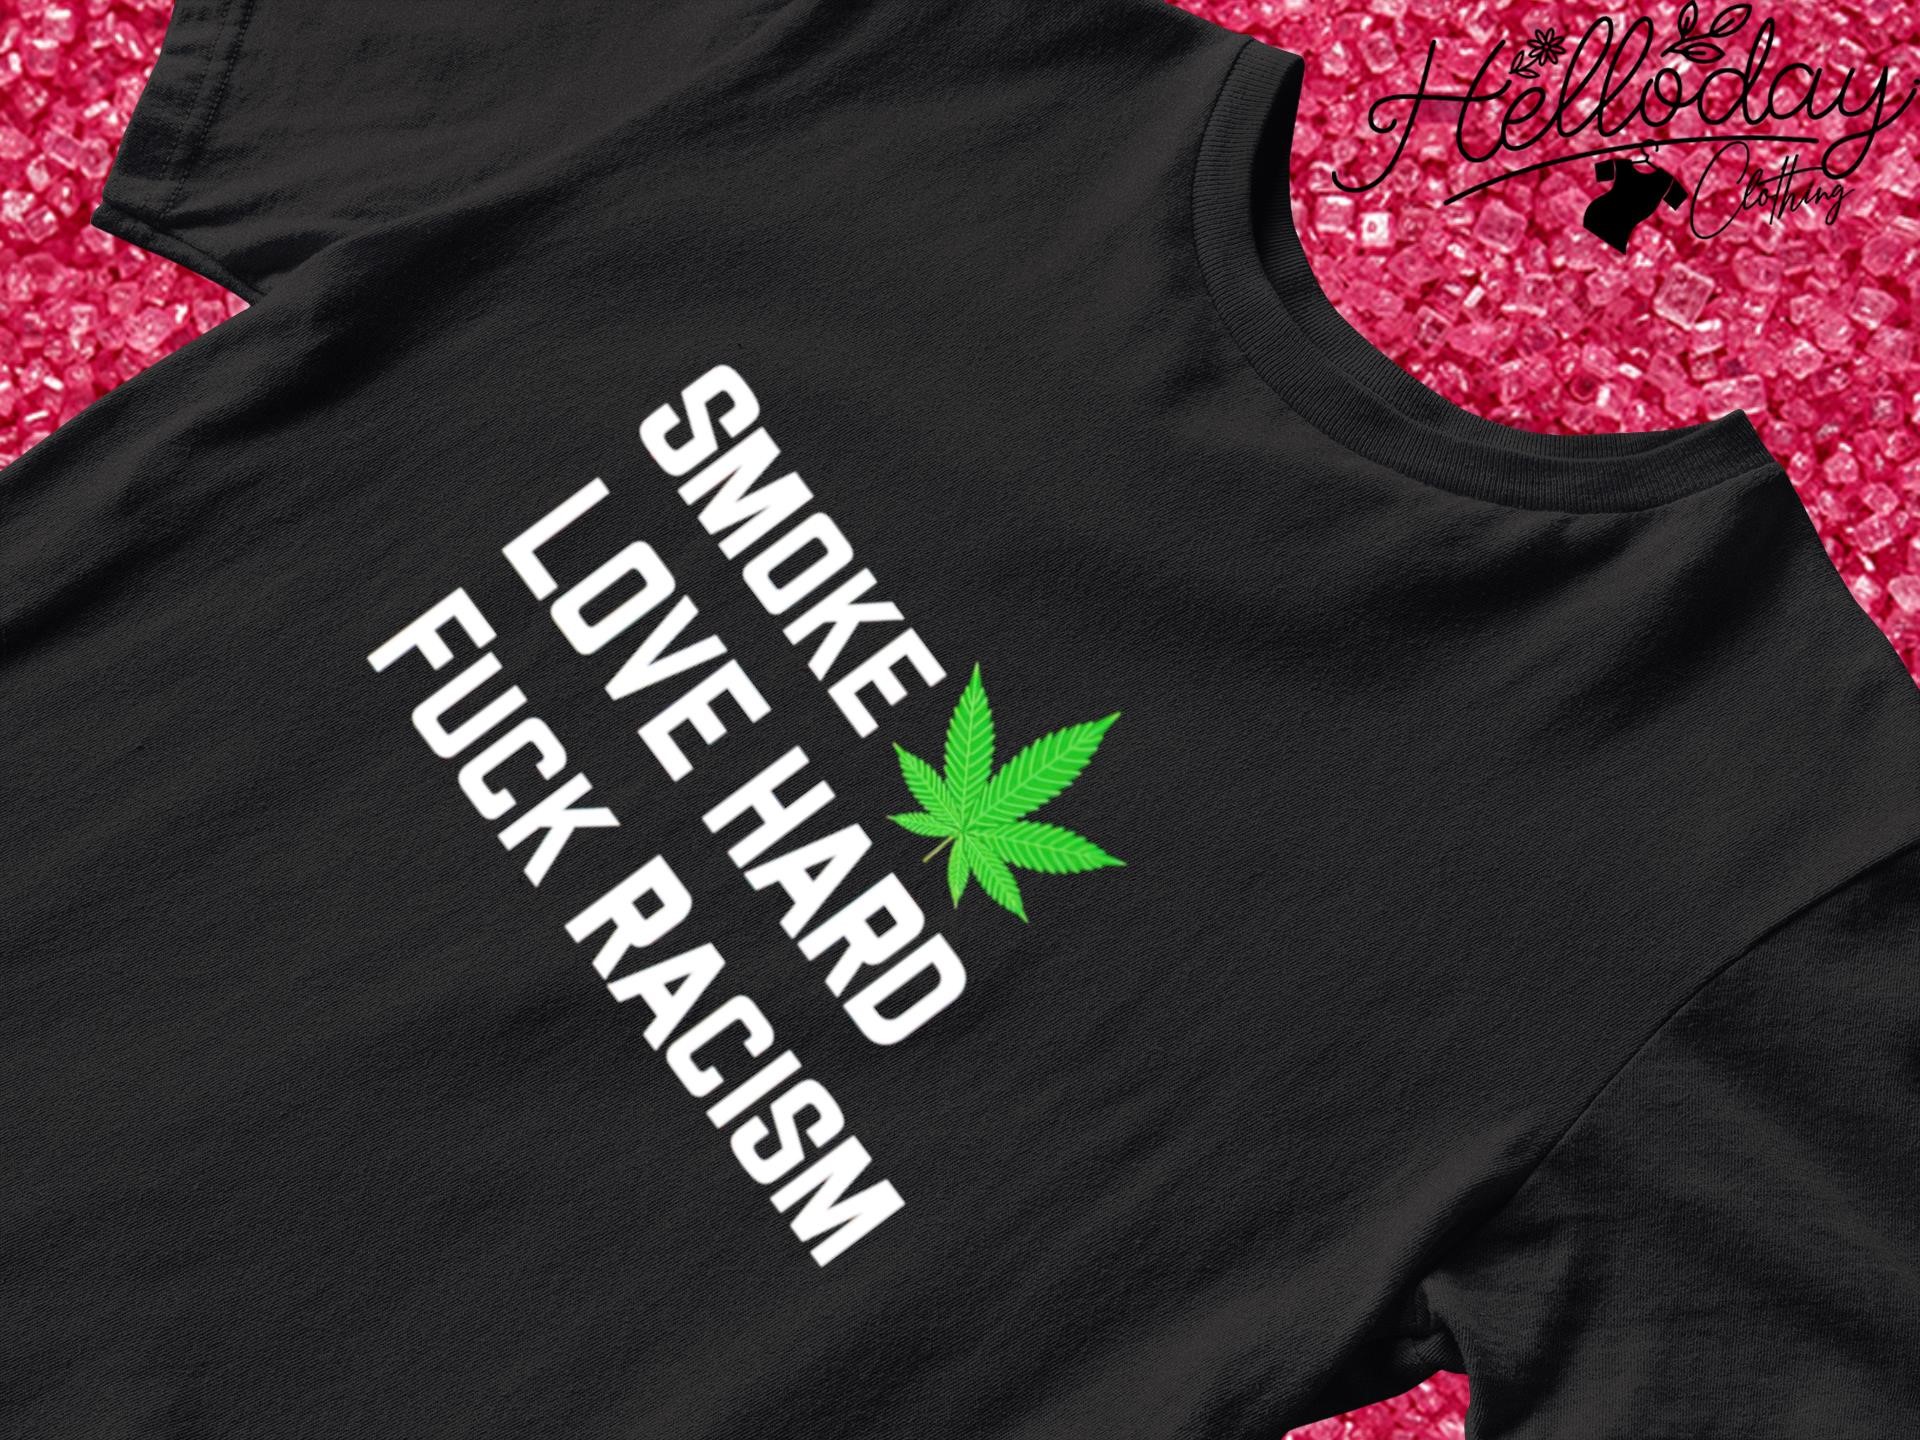 Smoke weed love hard fuck racism T-shirt